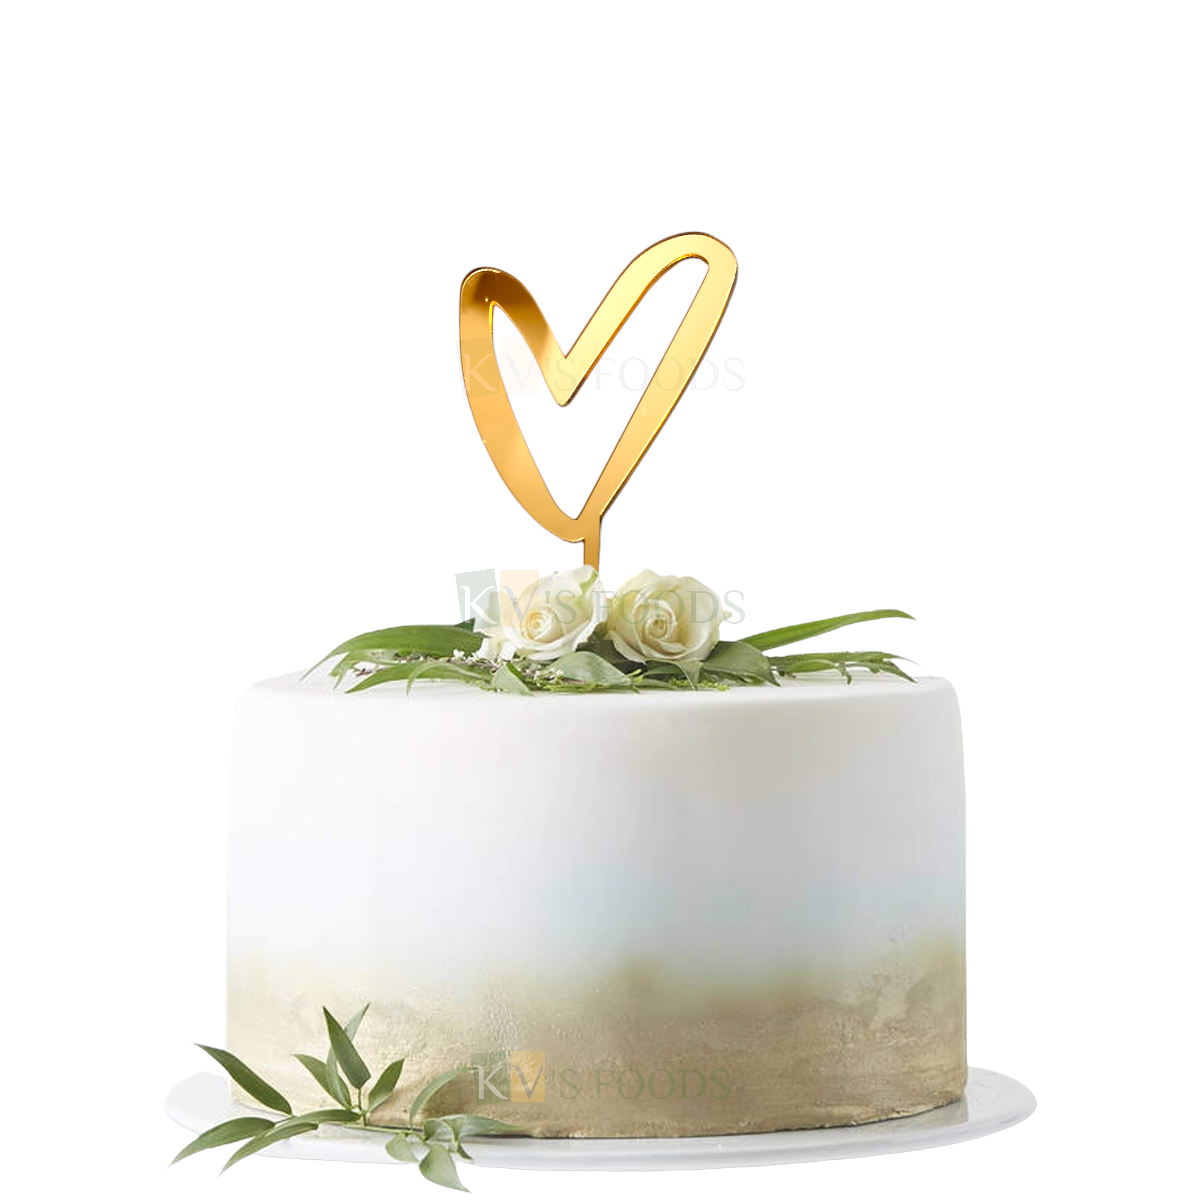 1PC Golden Acrylic Shiny Glass Finish Asymmetric Heart Shape Cake Topper, Happy Anniversary Cake Theme Love Valentine's Day Cake and Cupcake Insert, DIY Wedding Cake Decorations